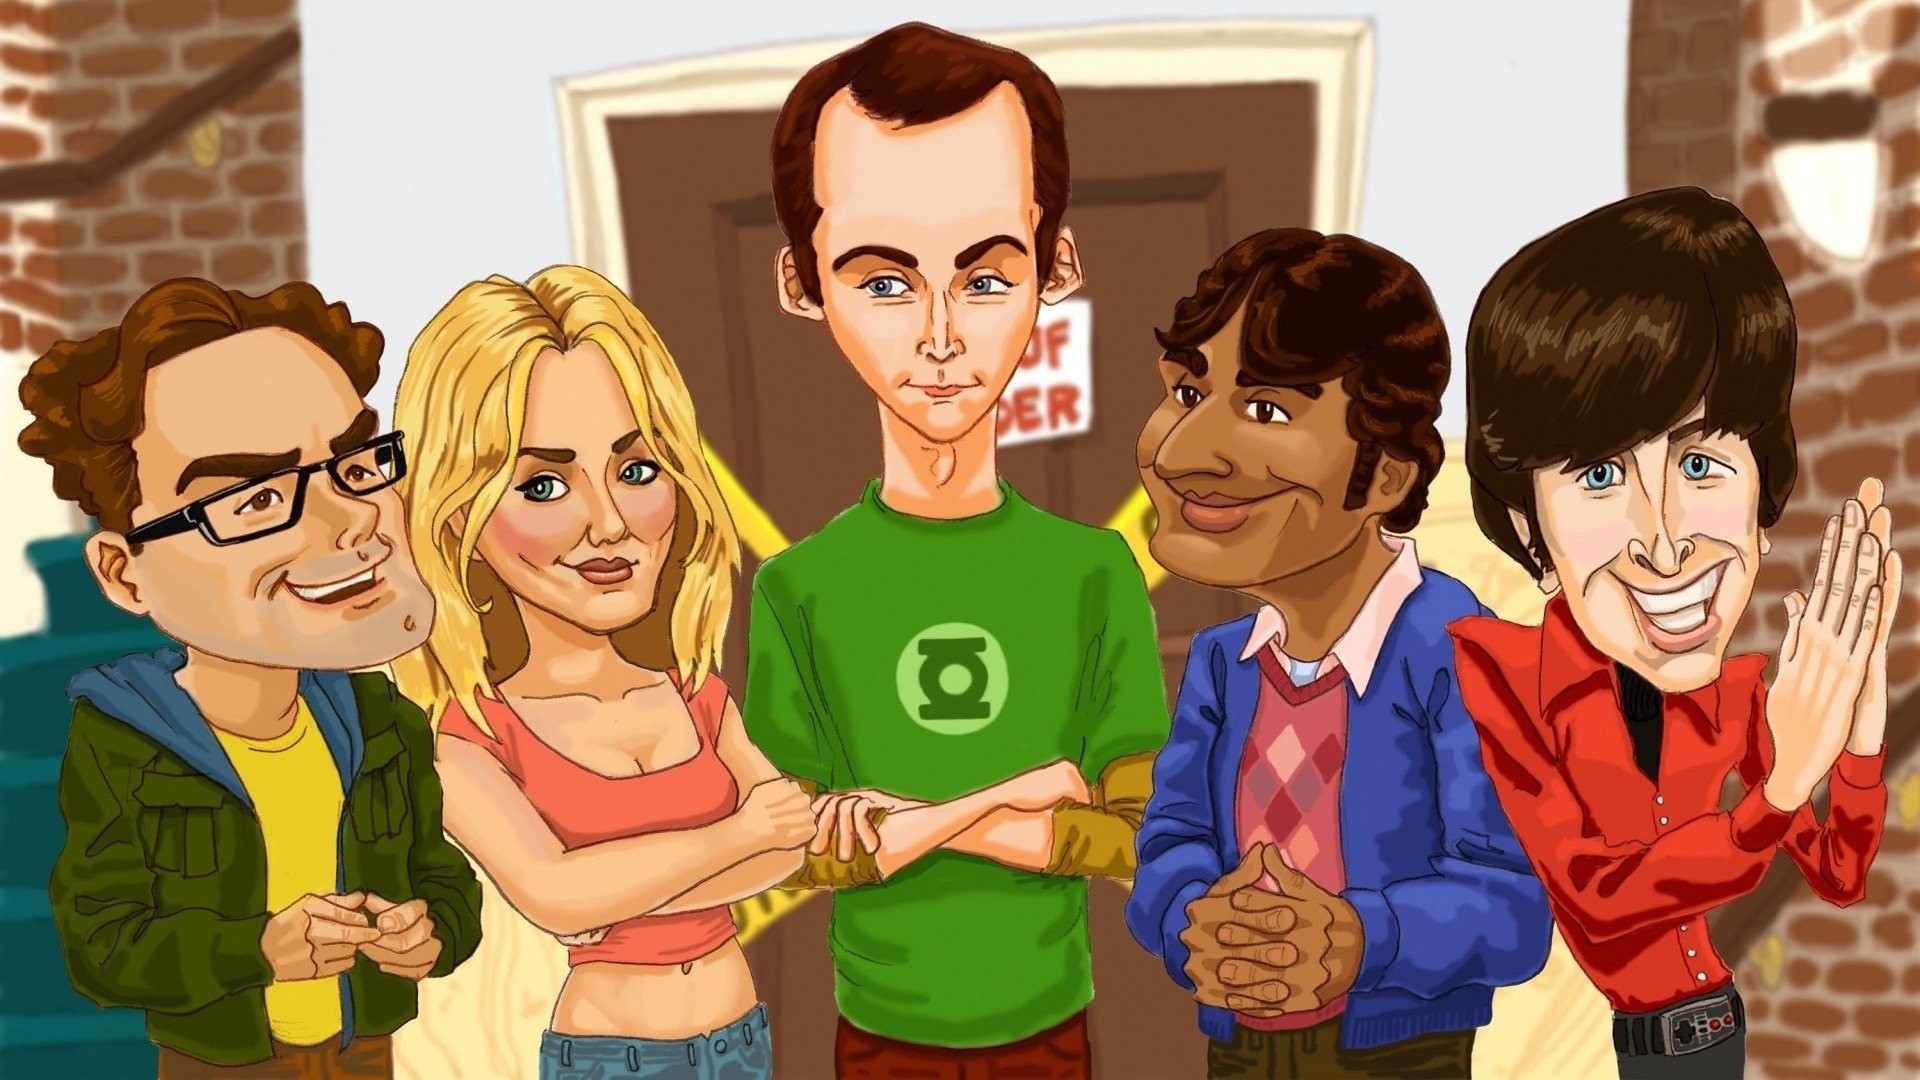 General 1920x1080 The Big Bang Theory Sheldon Cooper Leonard Hofstadter Penny Howard Wolowitz Raj Koothrappali caricature TV series artwork men women nerds